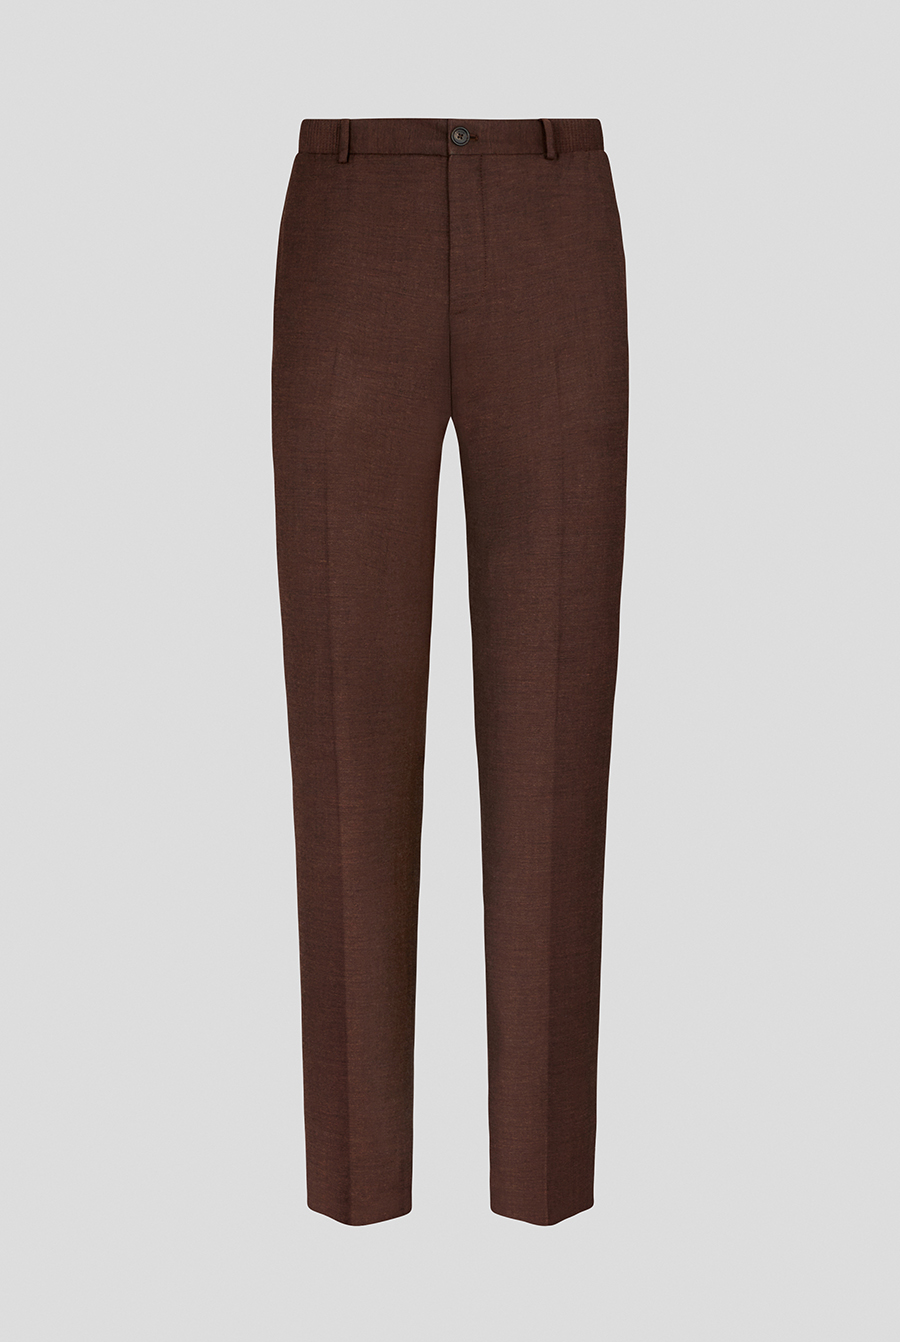 $850 Marni Women's Brown Wool Trousers Pants Size 42 | eBay